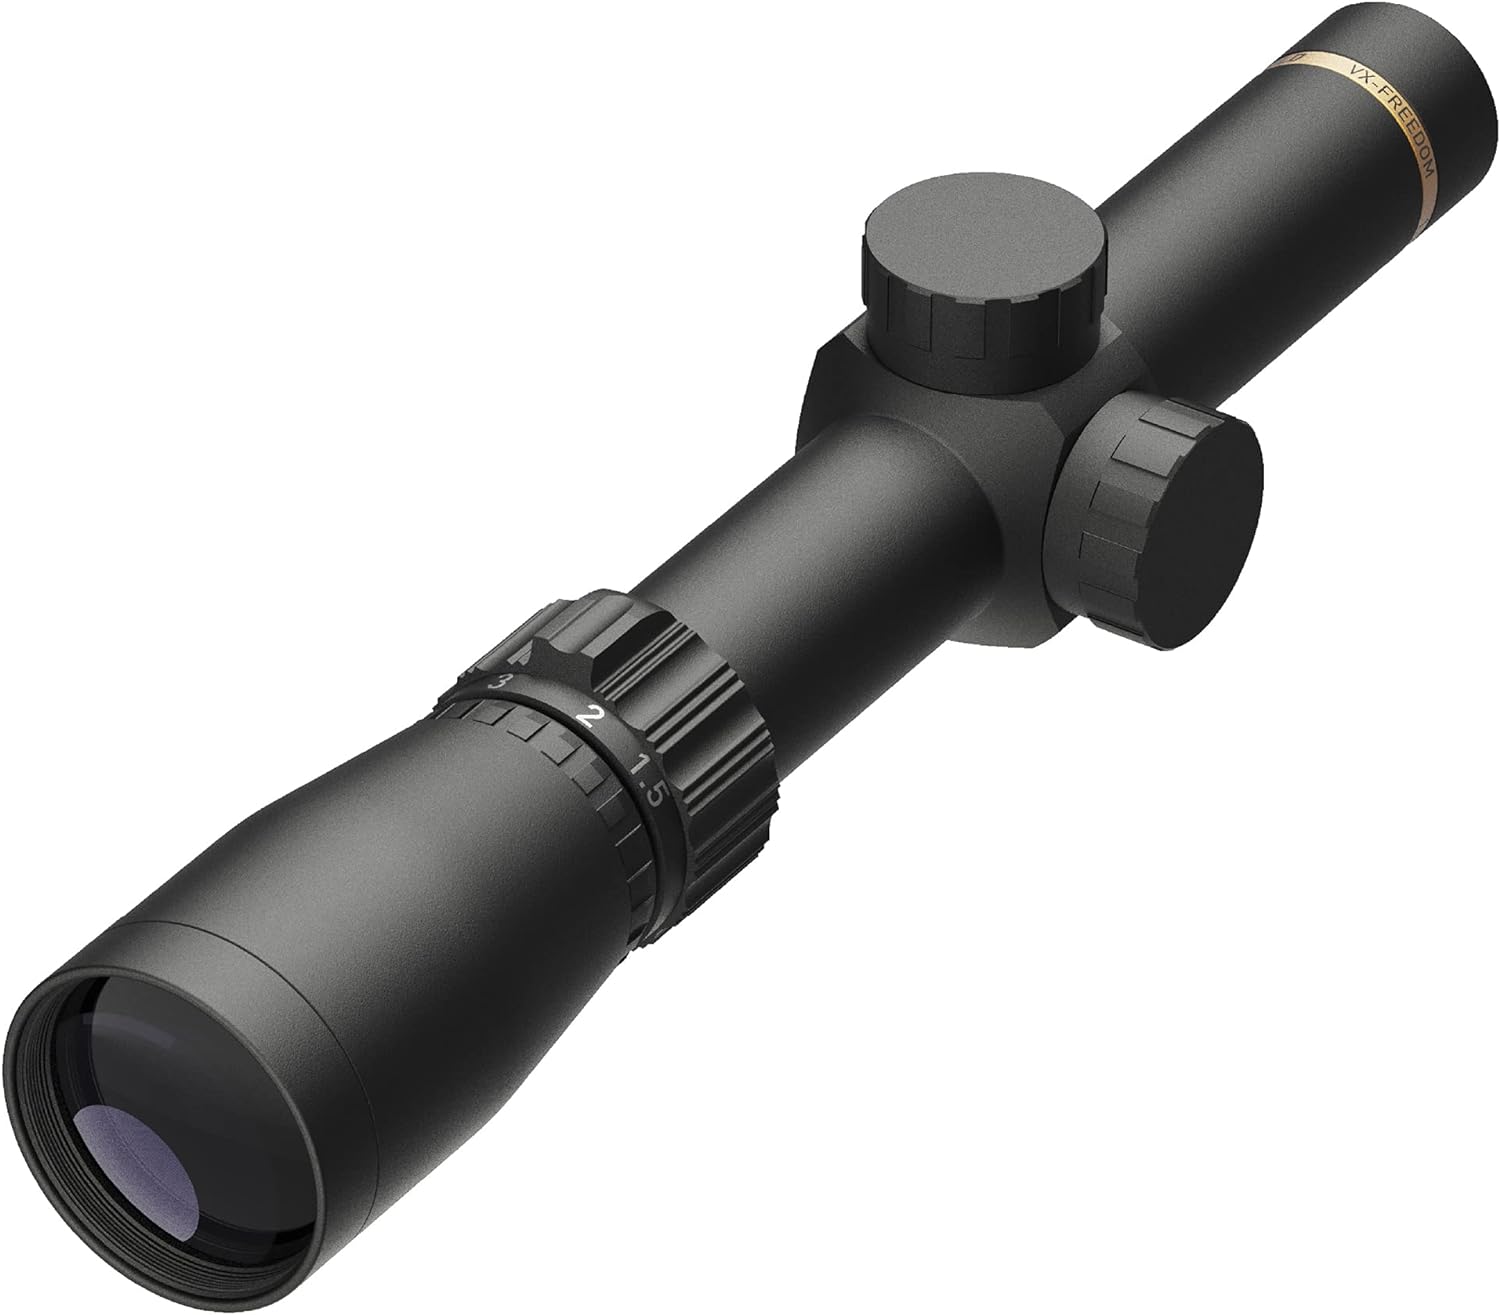 Leupold VX-Freedom 1.5-4x20mm Riflescope Review